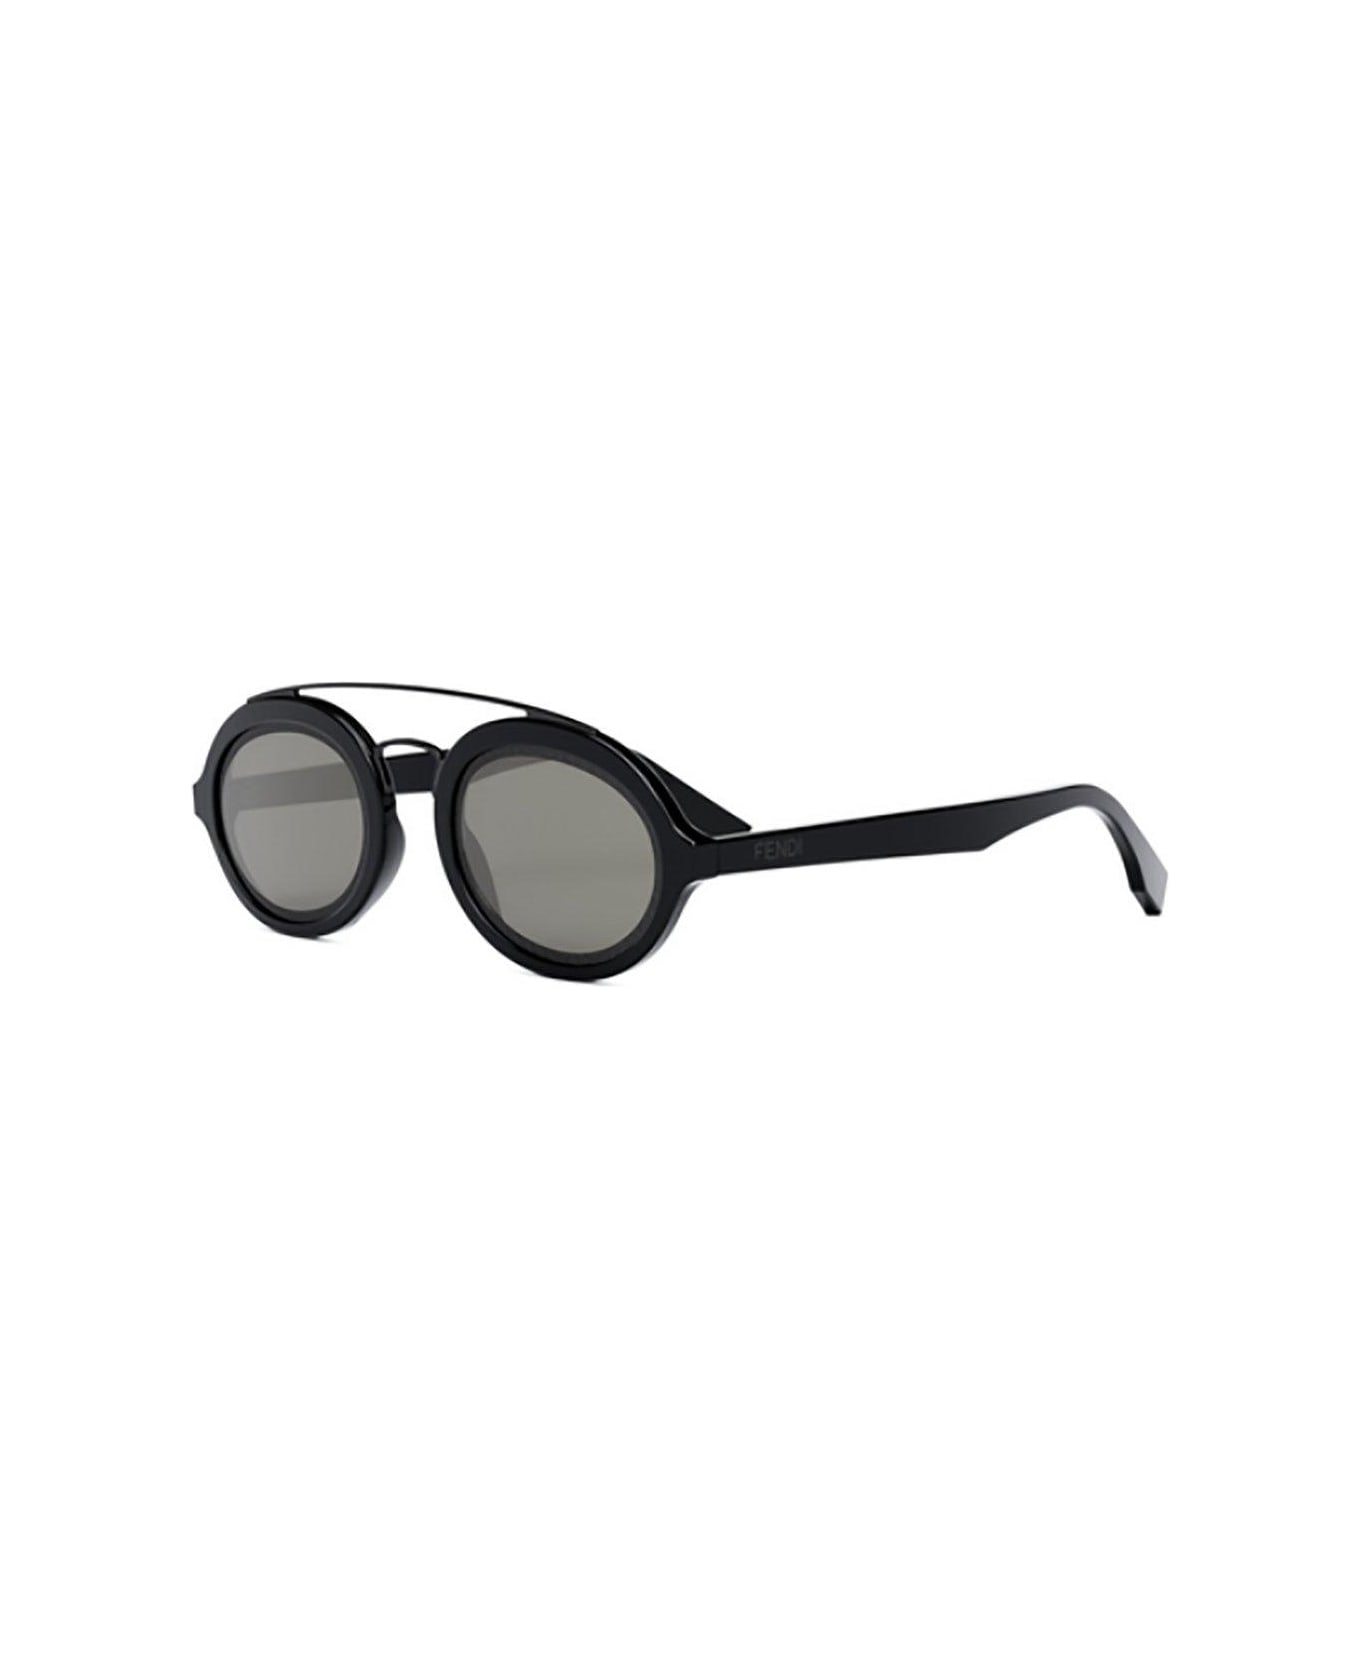 Fendi Eyewear Oval Frame Sunglasses - 01a